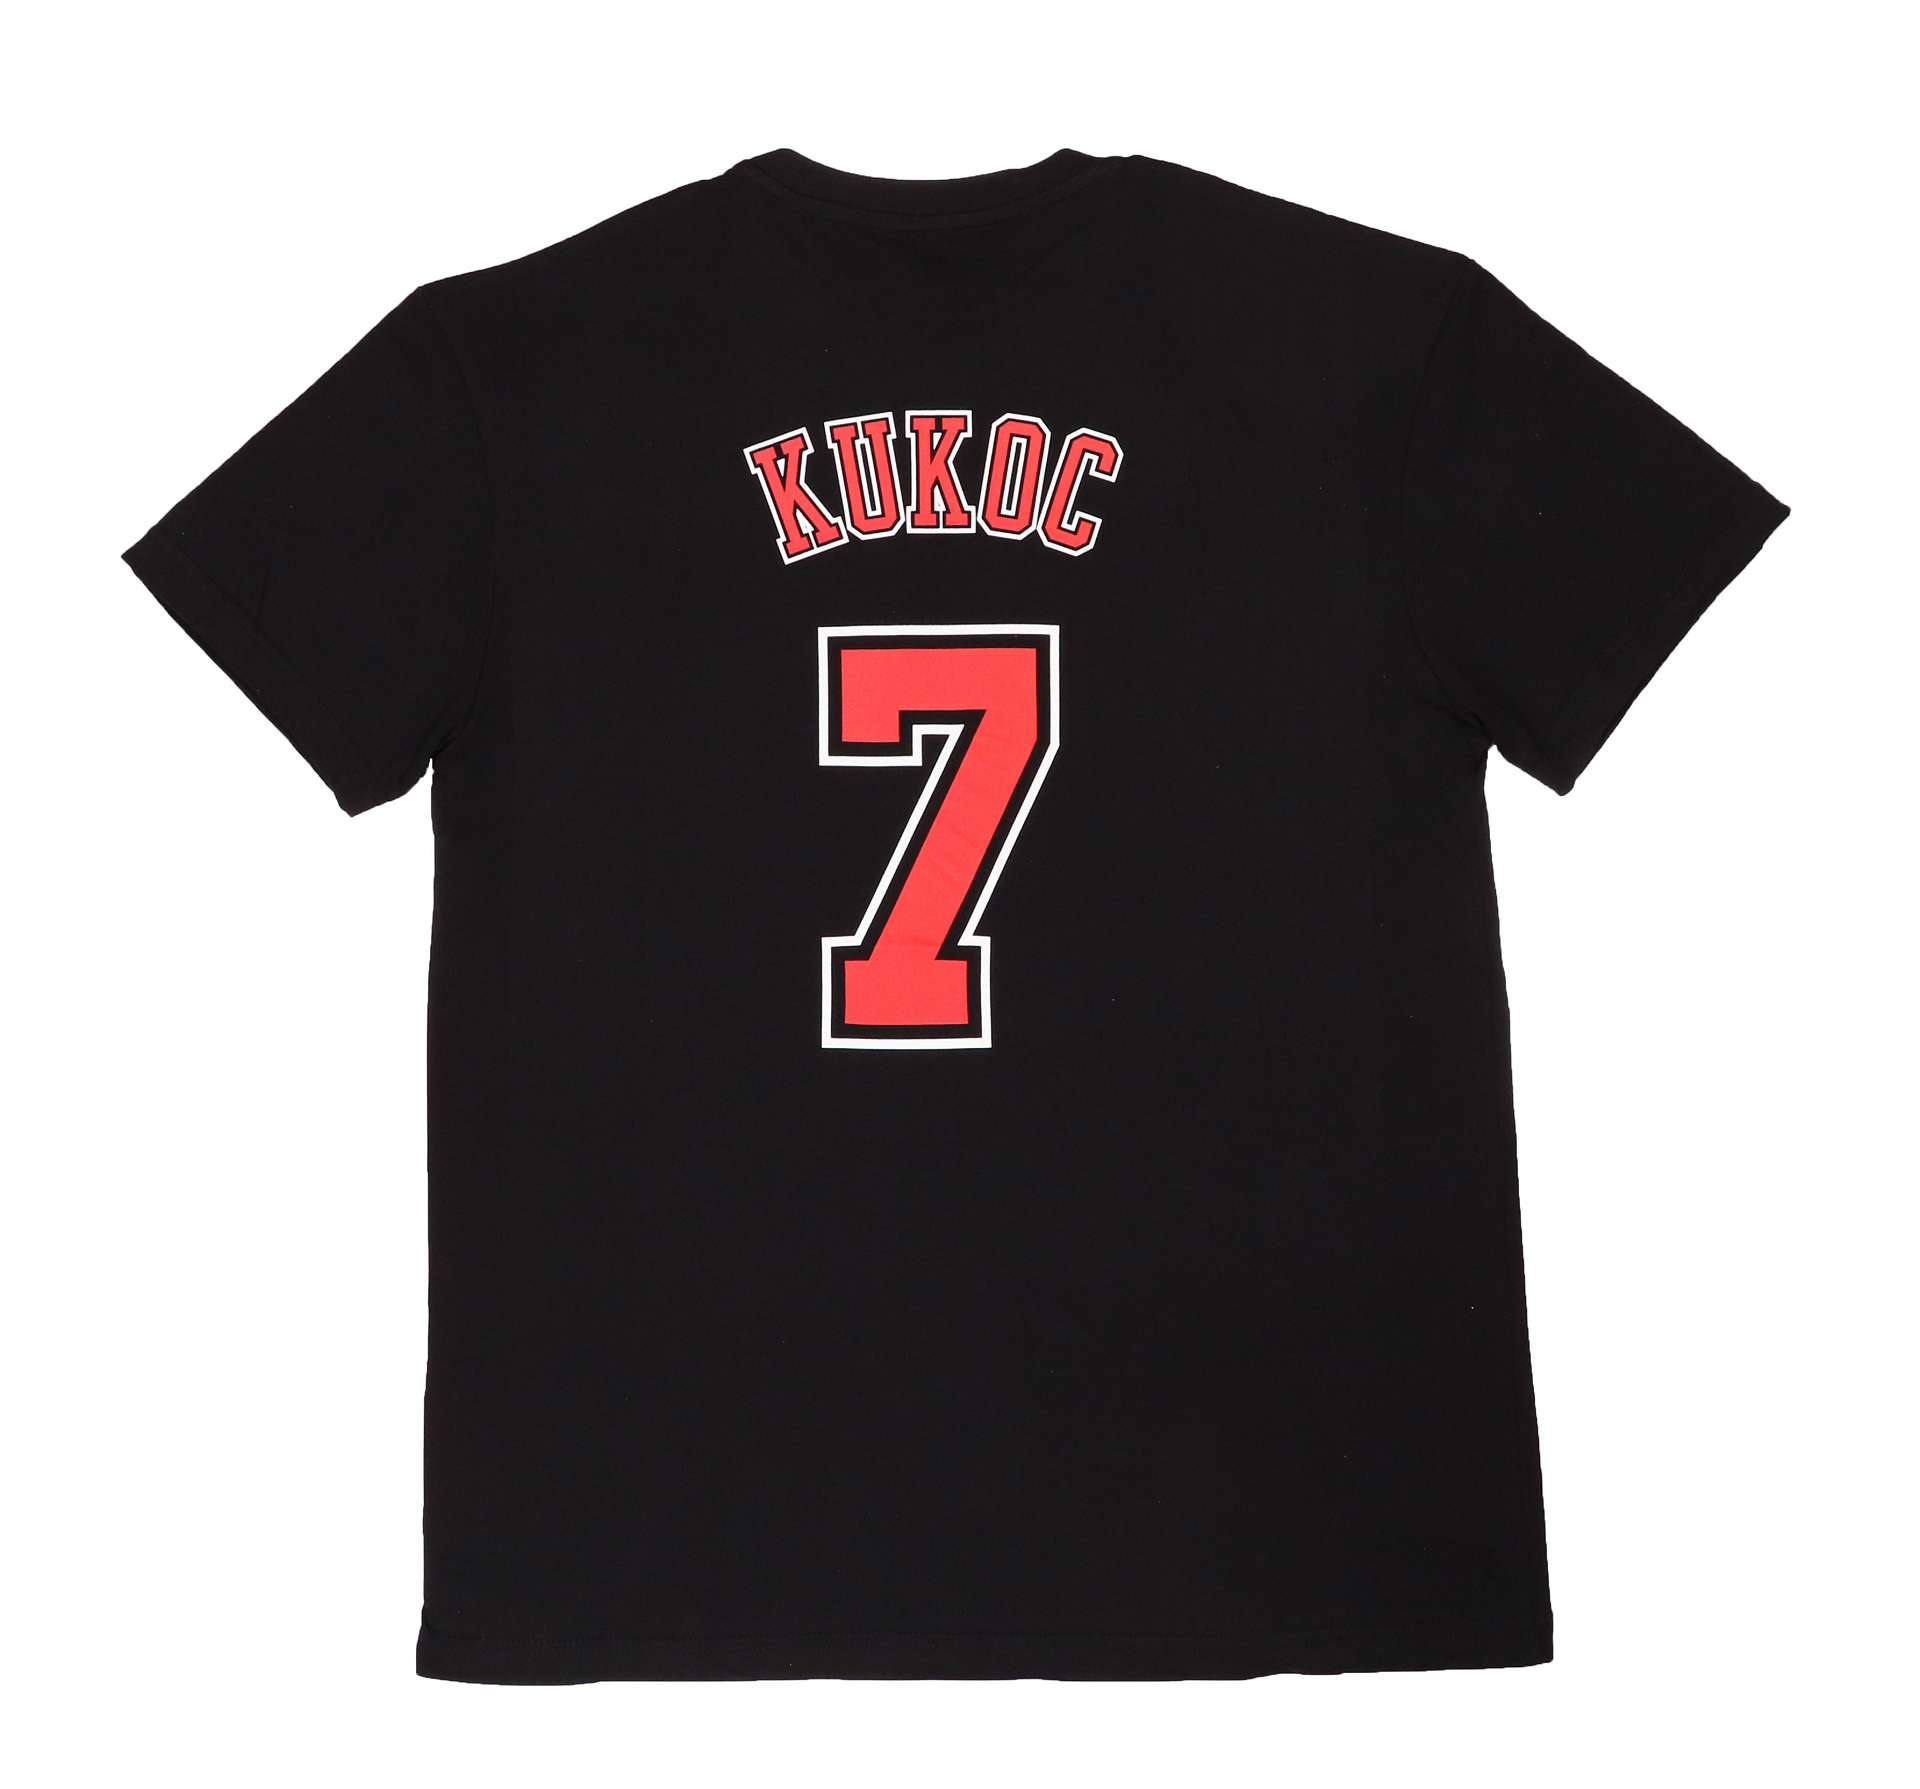 Toni Kukoc #7 Chicago Bulls NBA Name & Number Tee Black T-Shirt Mitchell & Ness